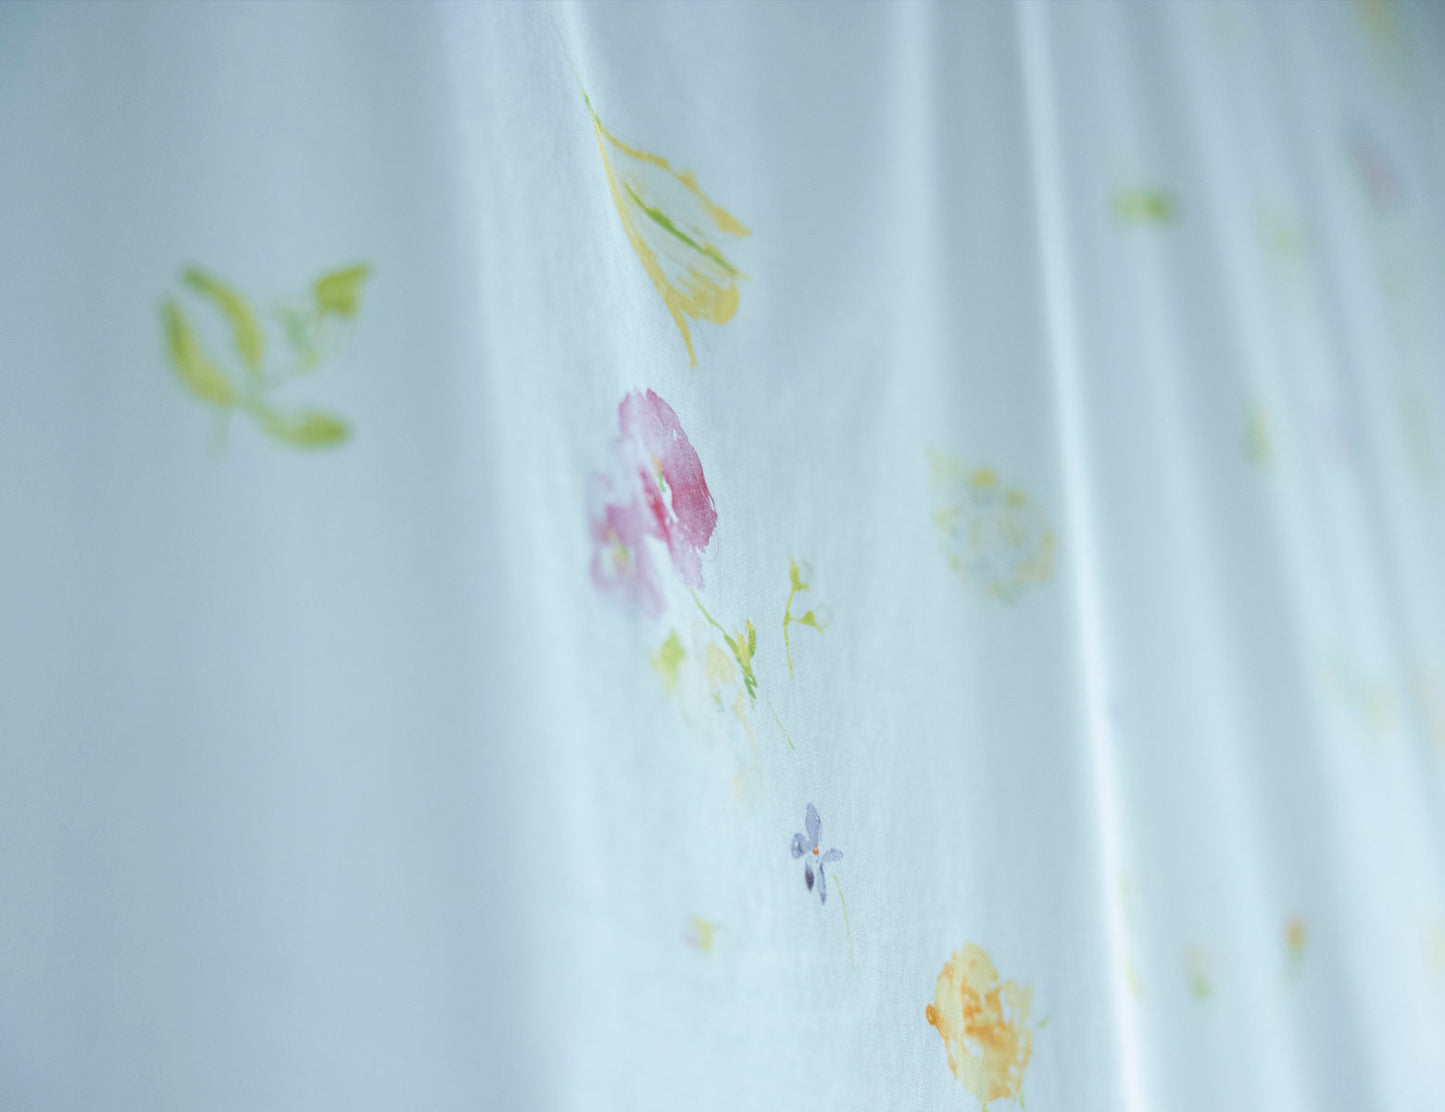 nani IRO - new Morning - A - Silk Twill Fabric